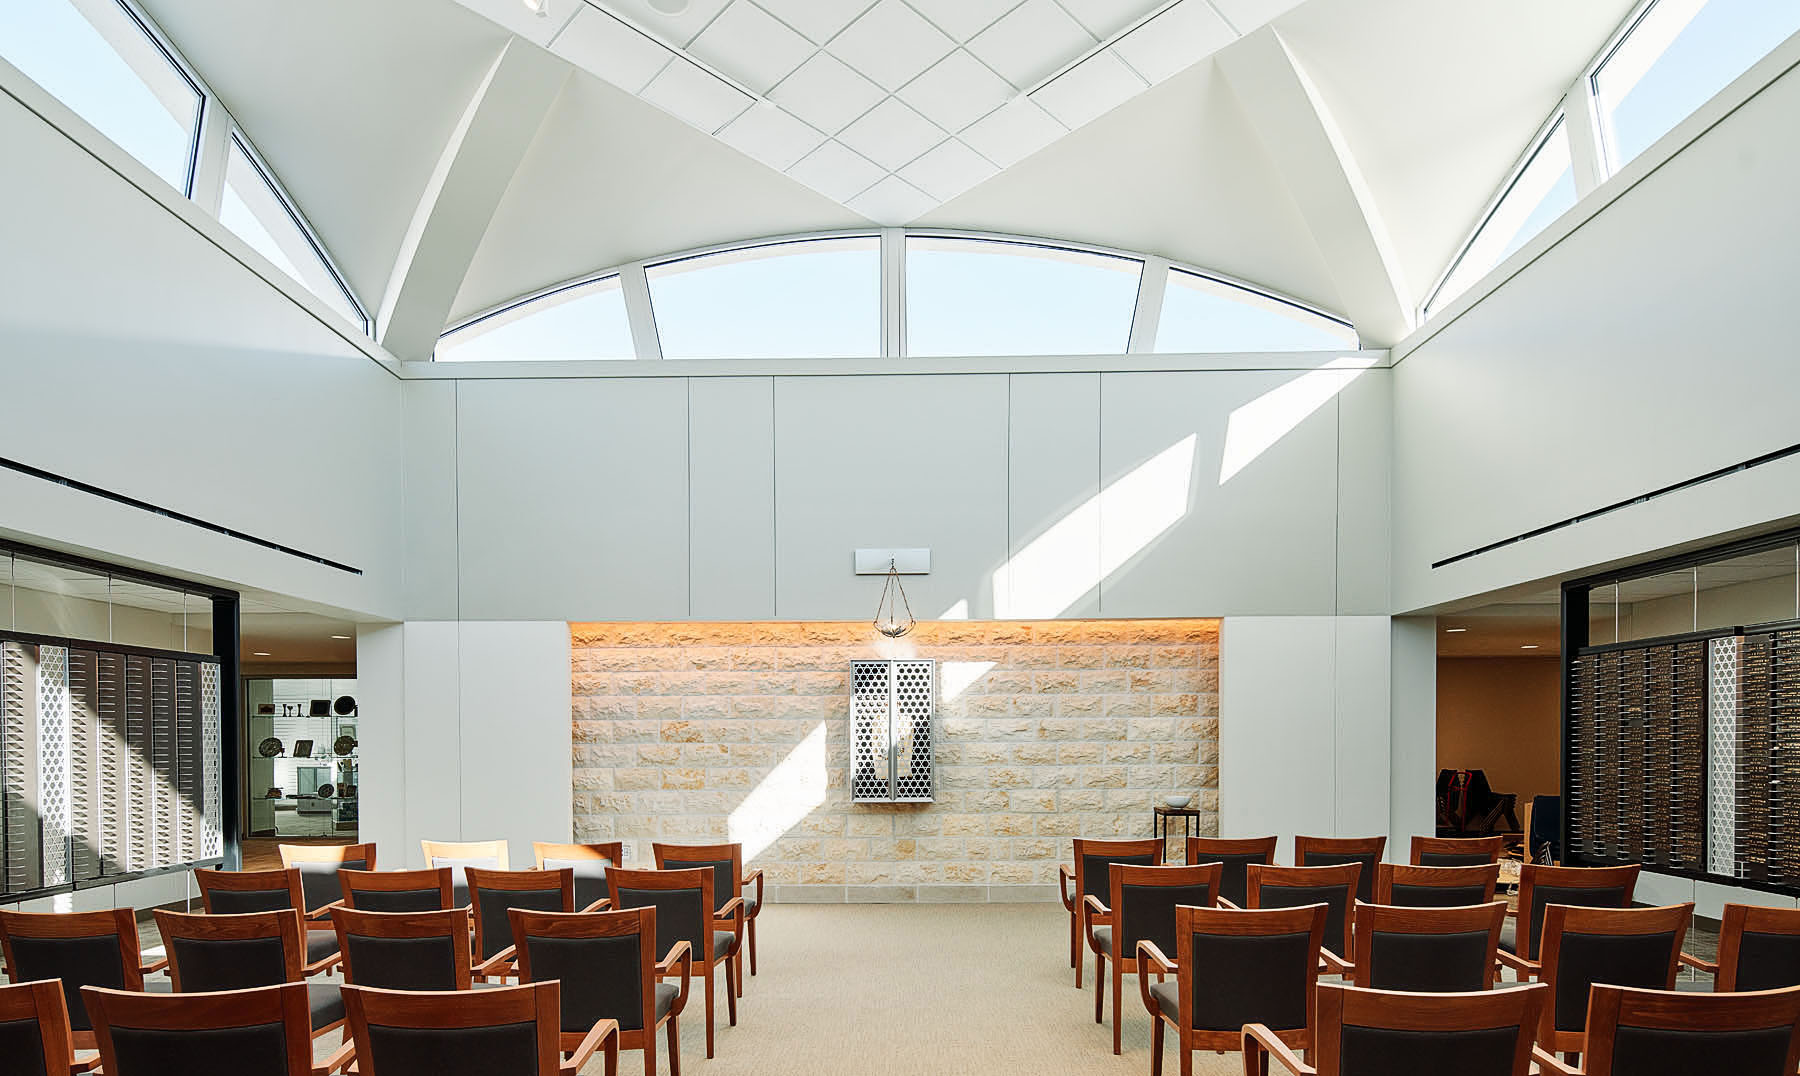 The Temple, Congregation B’nai Jehudah prayer space